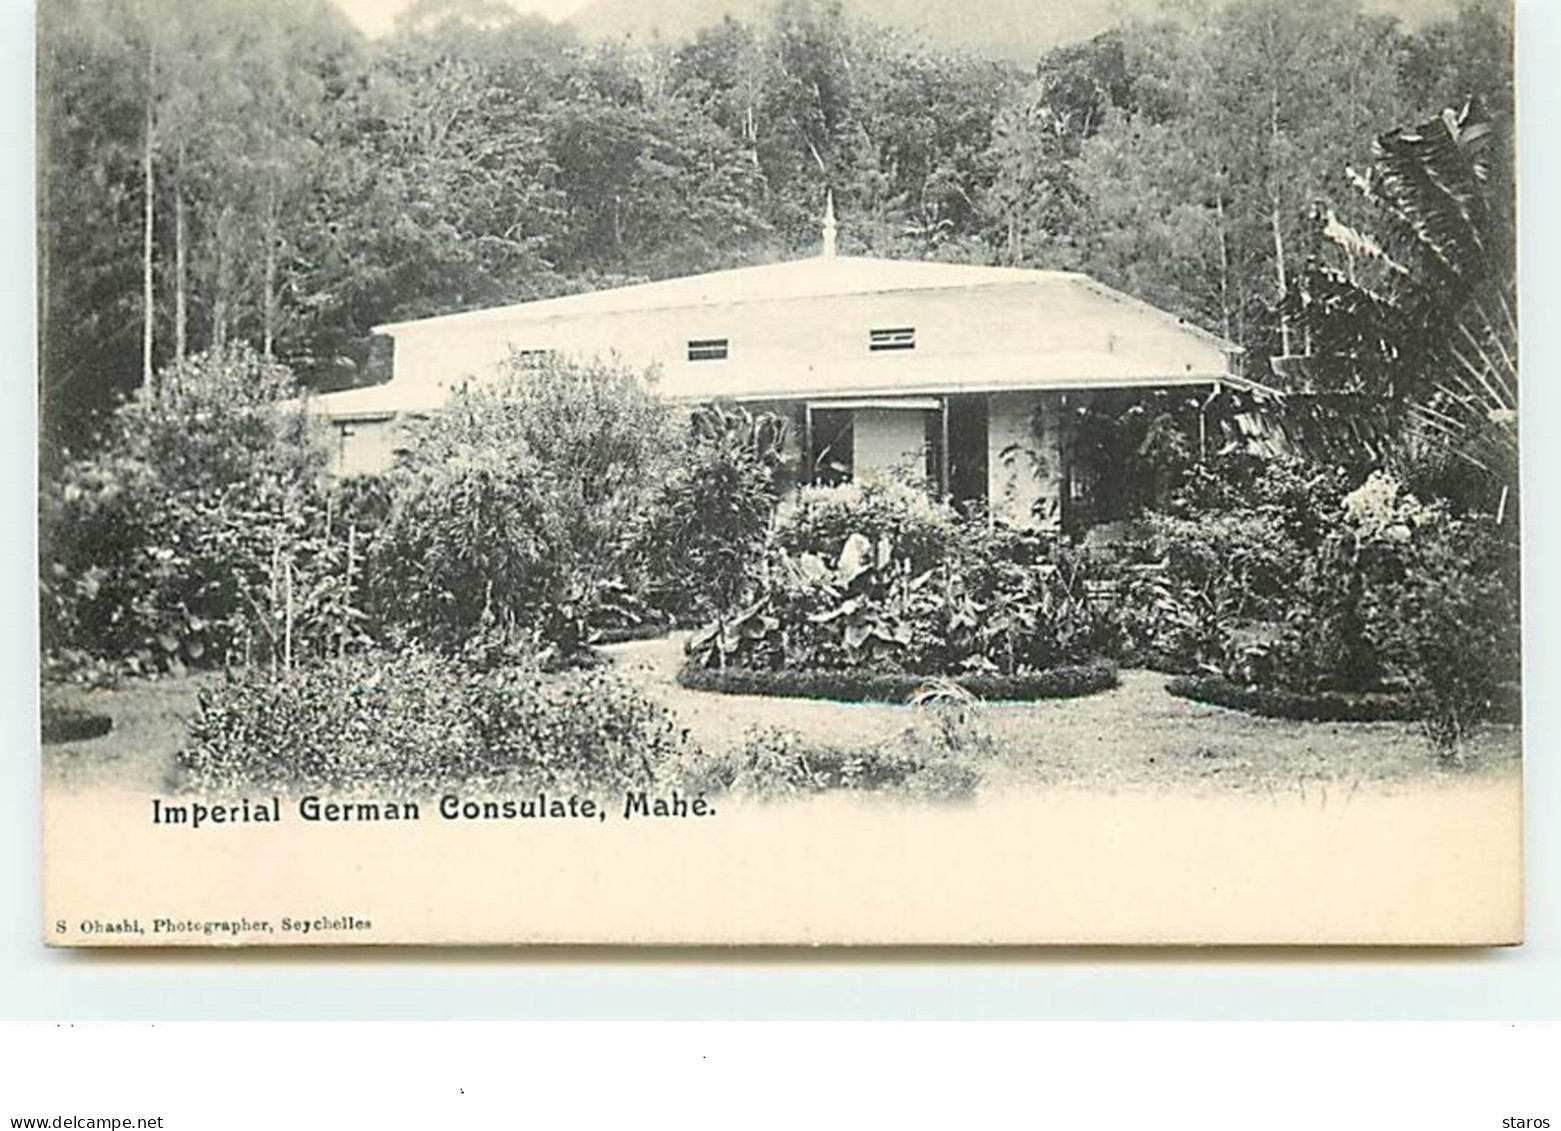 SEYCHELLES - Imperial German Consulate - MAHE - Seychellen